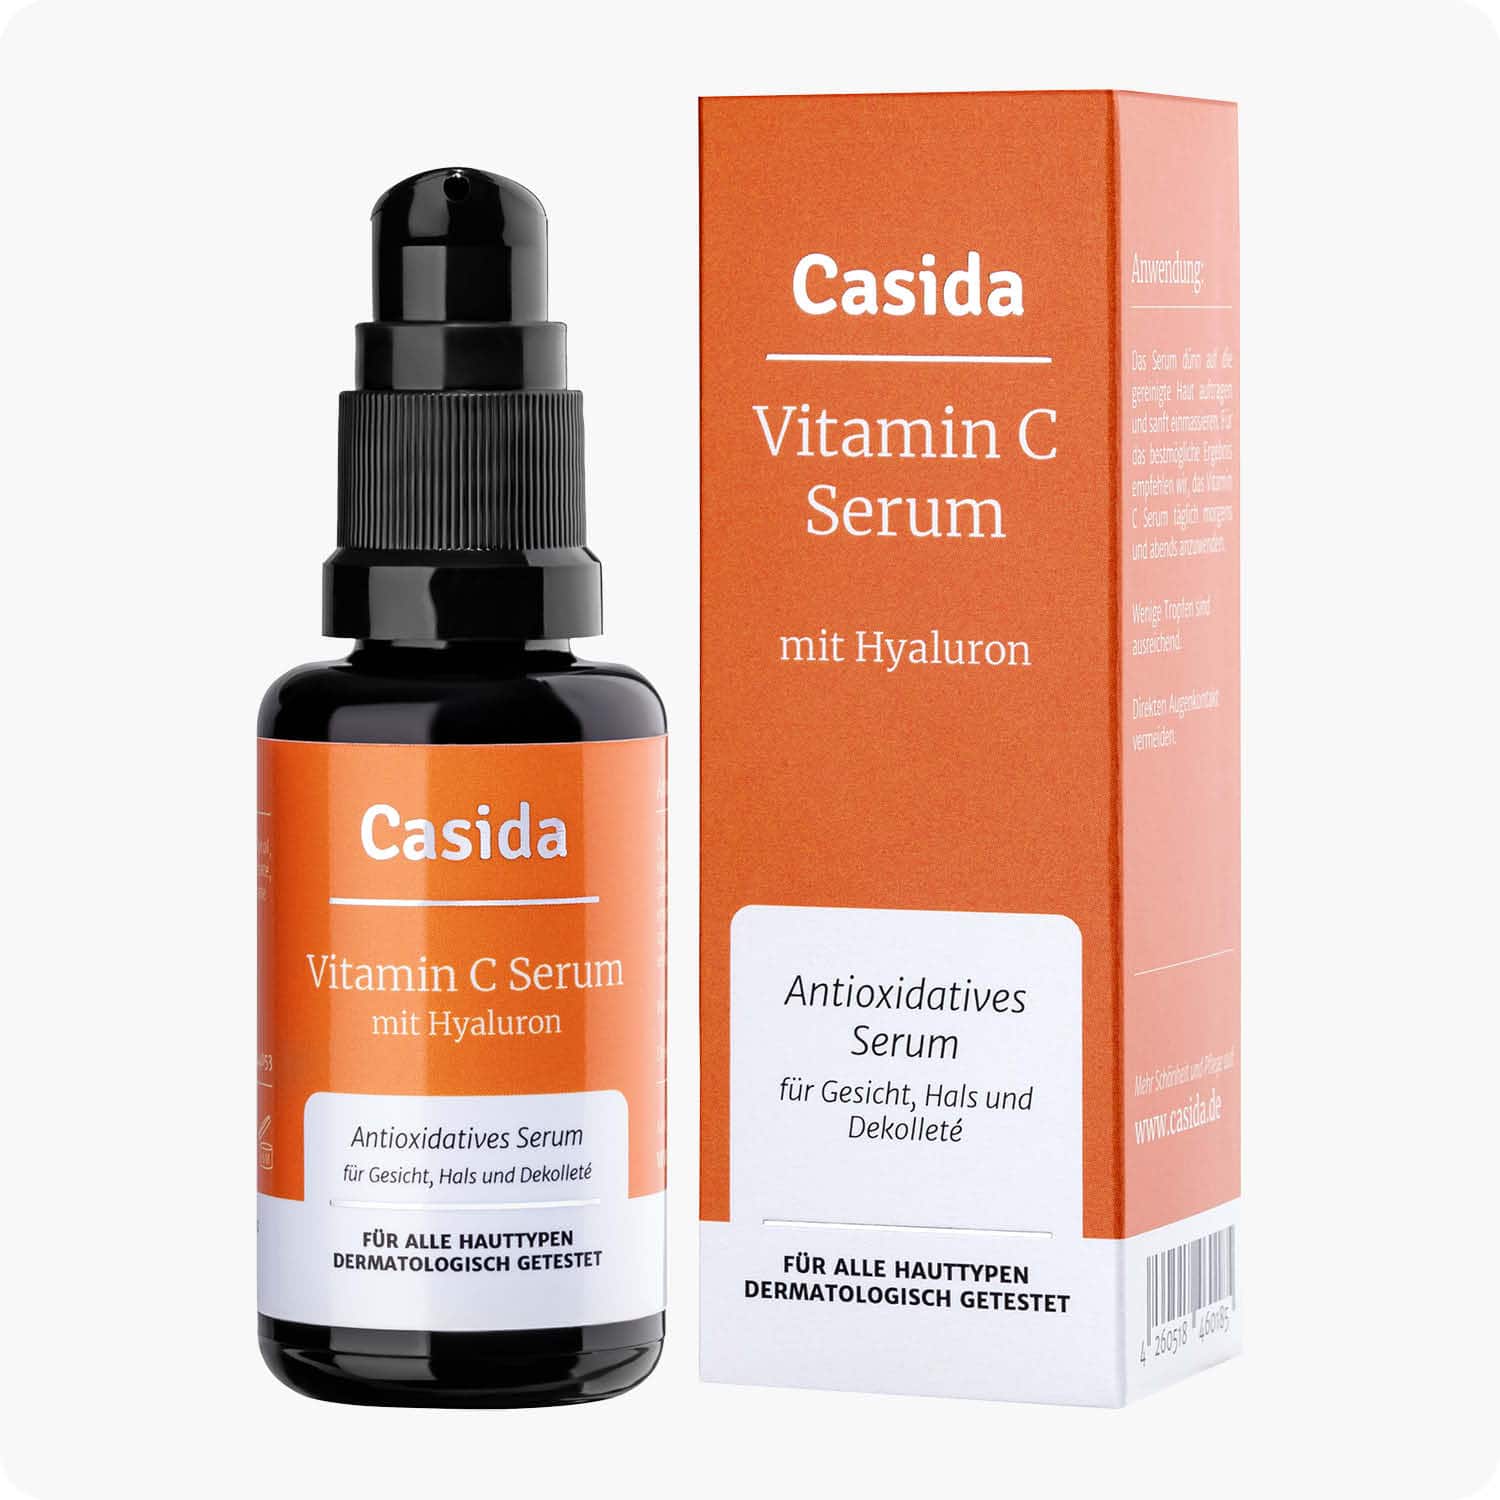 Casida Vitamin C Serum + Hyaluron – 30 ml 14044053 PZN Apotheke Antioxidantien Anti-Aging a (1)